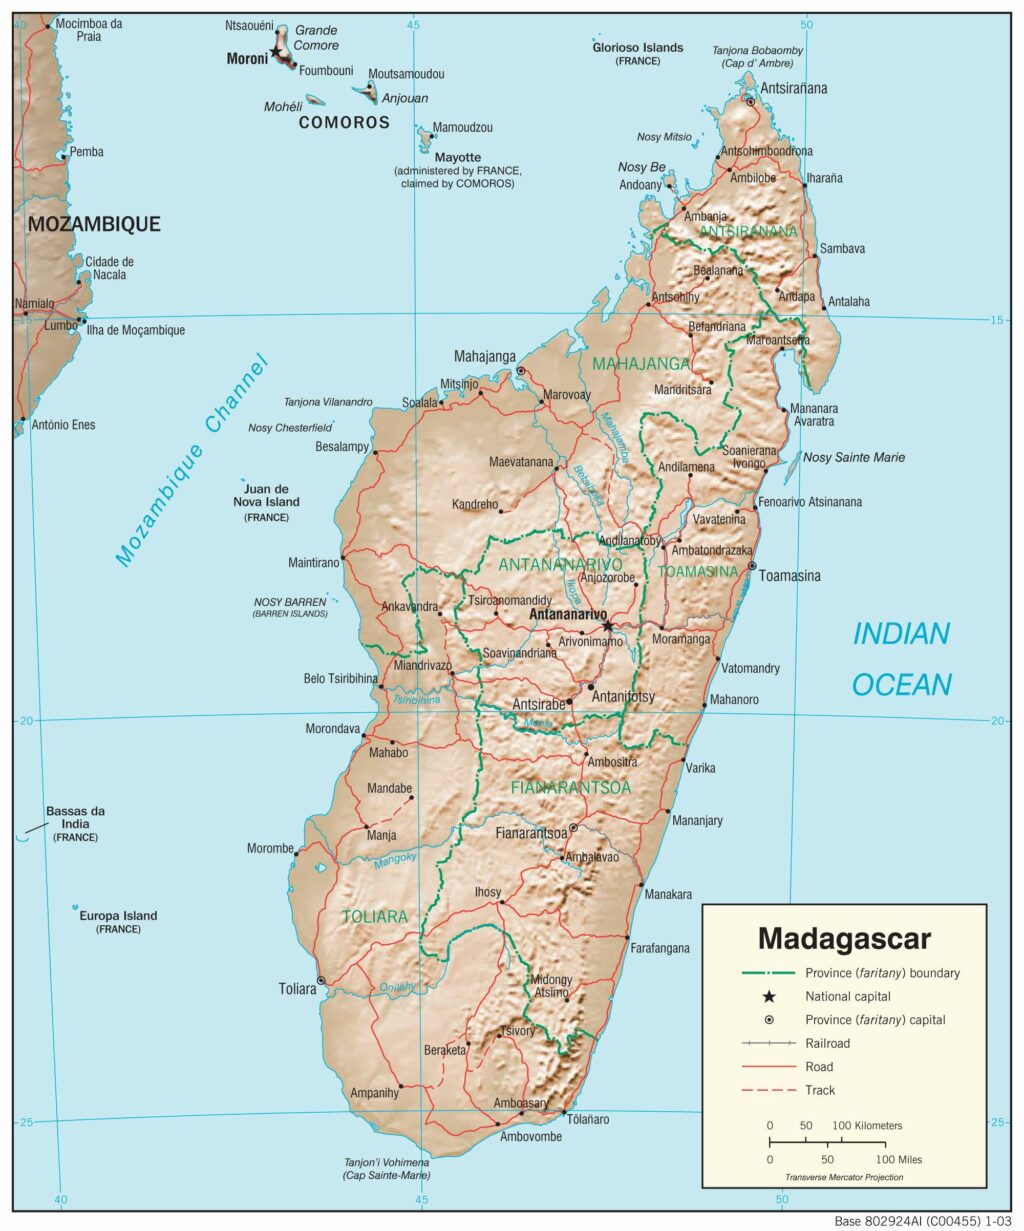 Madagascar physiography map.